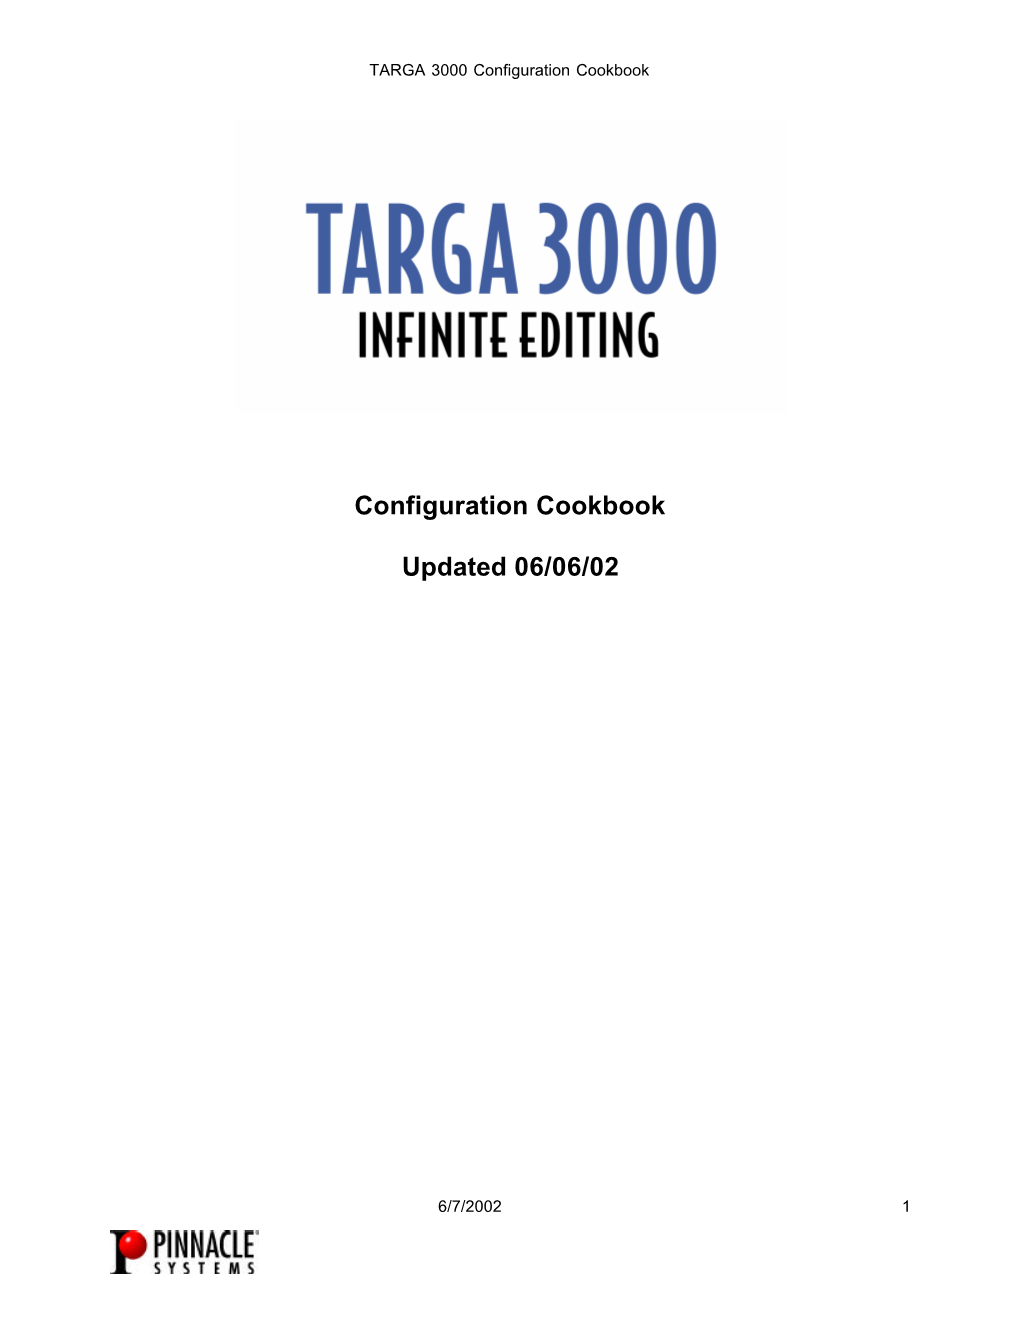 Configuration Cookbook060602